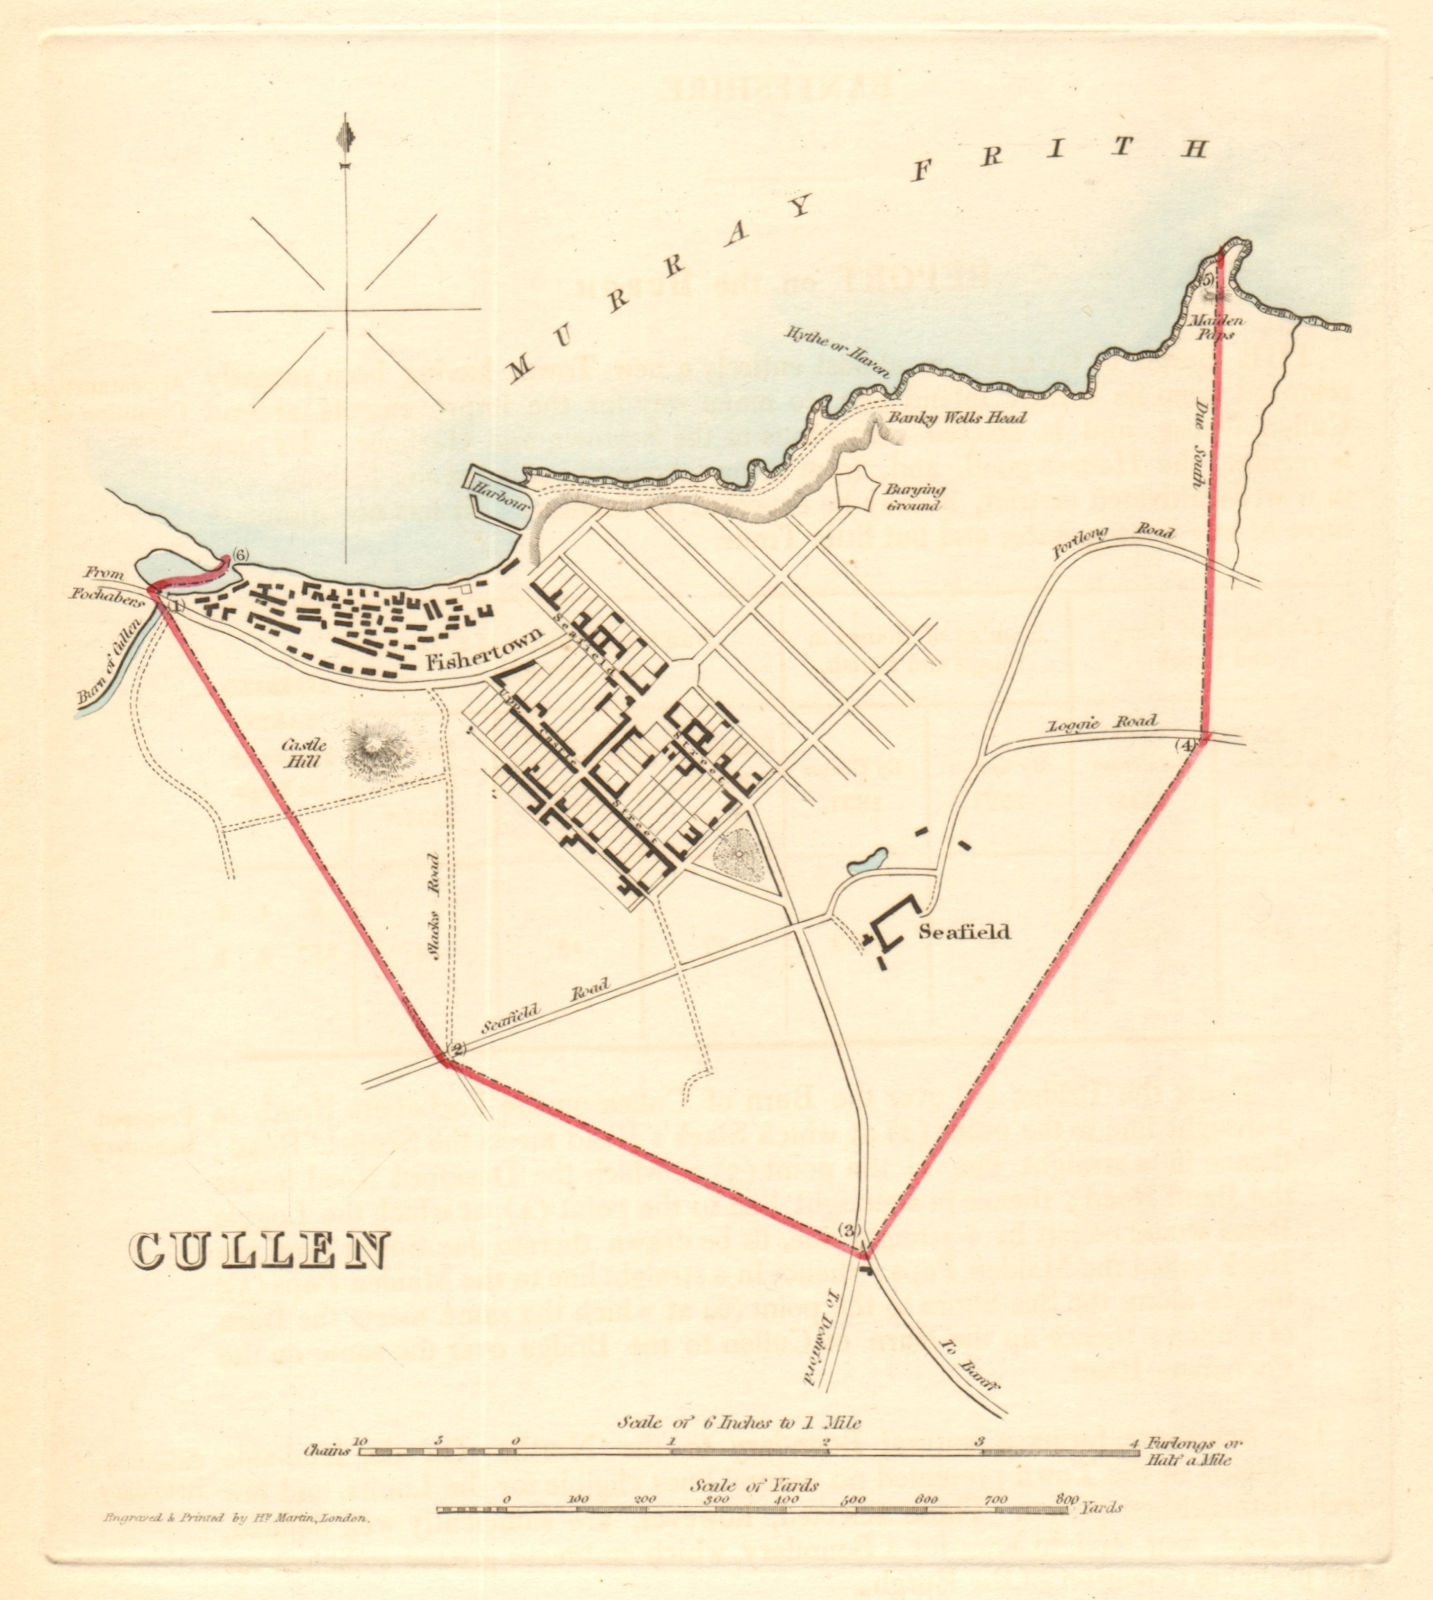 CULLEN borough/town plan for the REFORM ACT. Moray, Scotland. DAWSON 1832 map